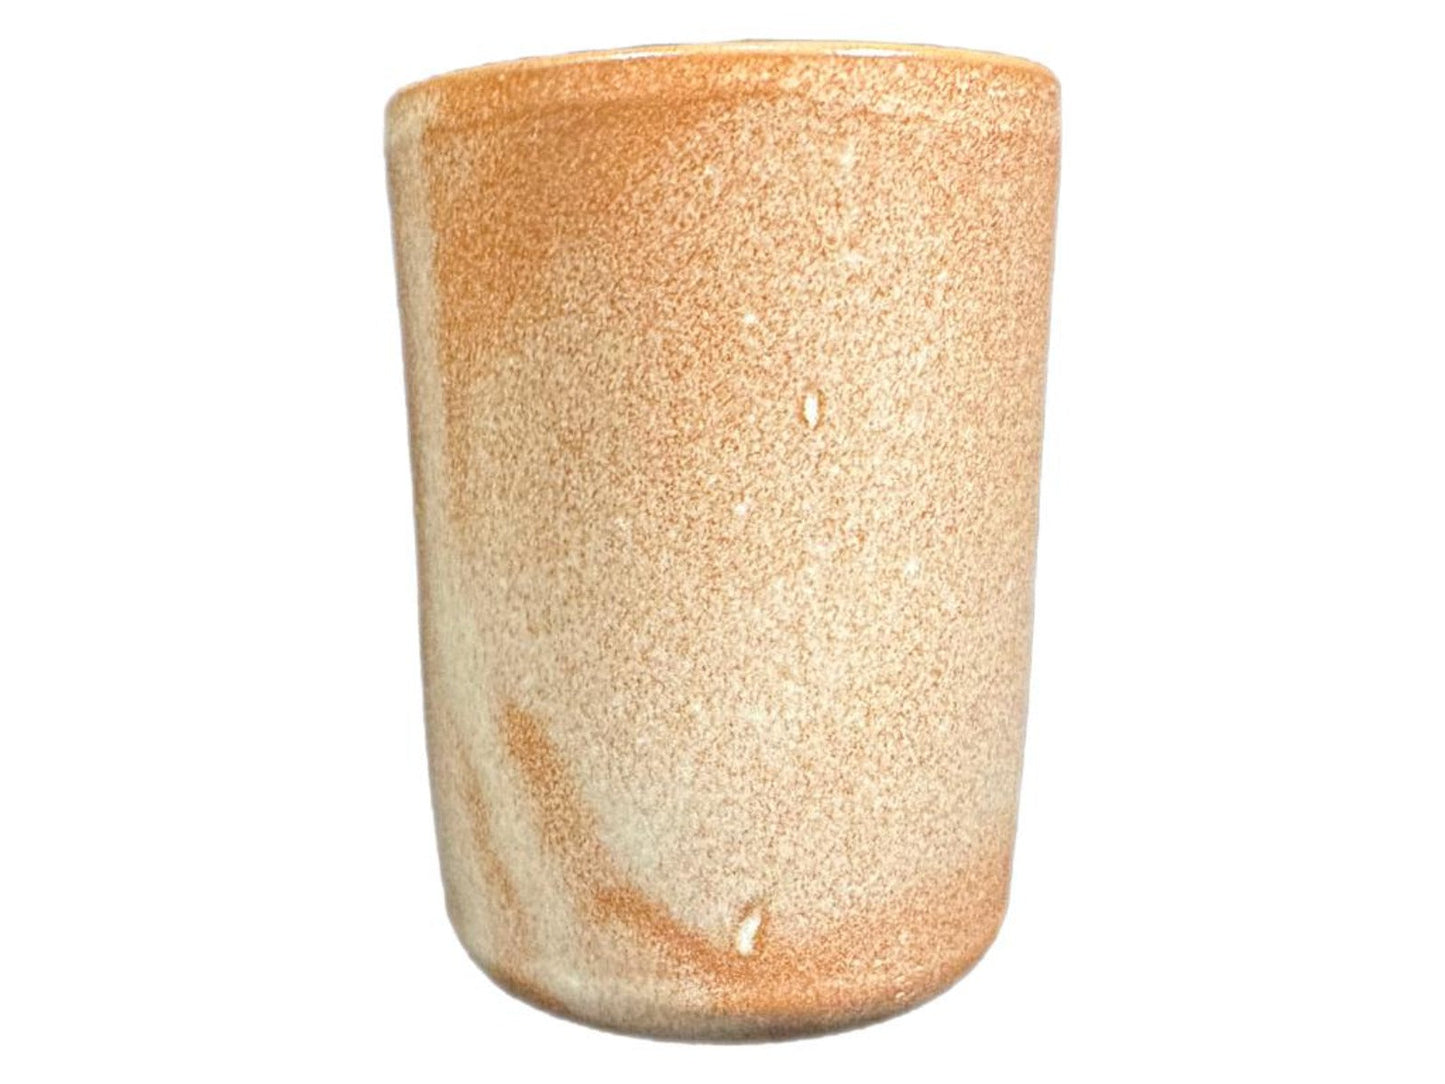 HP Padilla Spanish Terracotta Drinking Cups Stone-Wash Glaze Finish 225ml 6 Pack